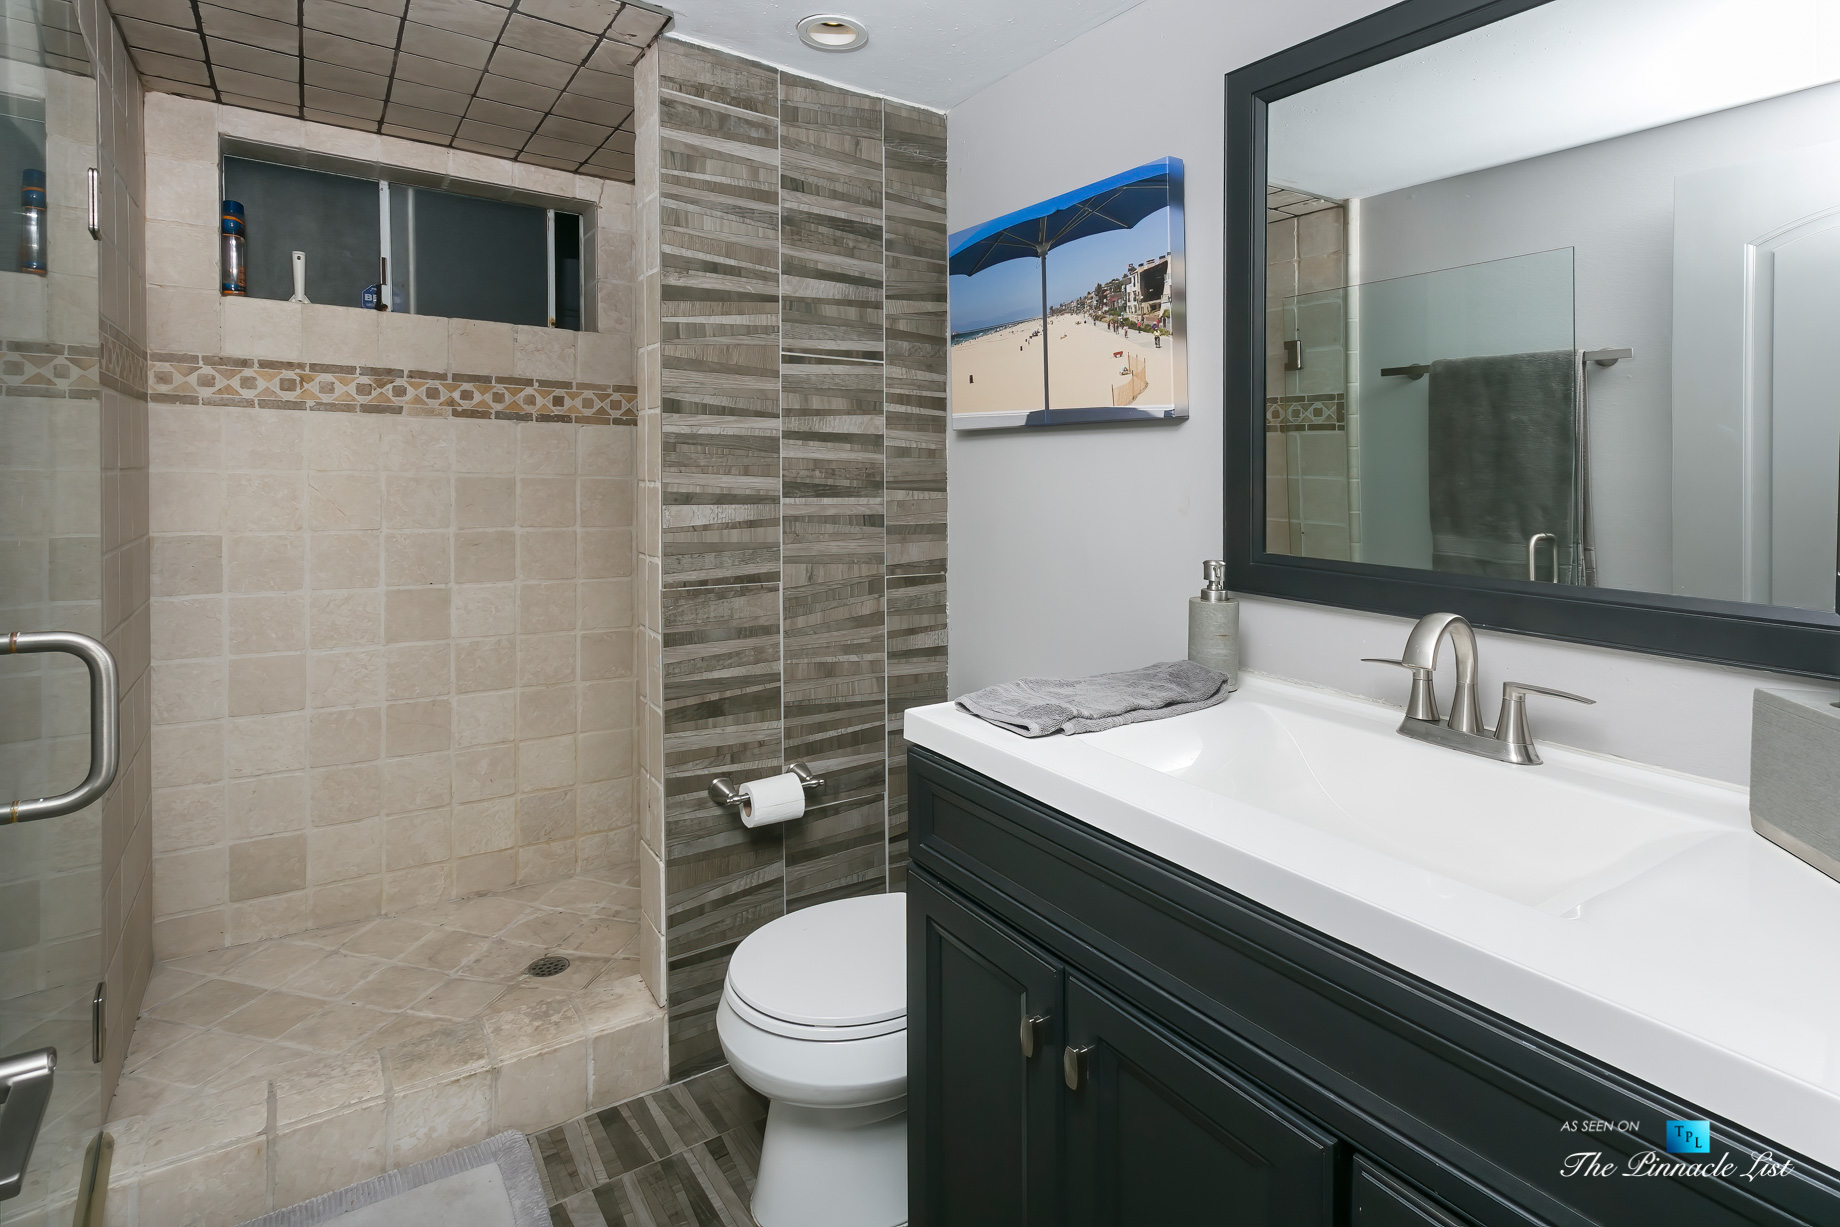 3500 The Strand, Hermosa Beach, CA, USA – Bathroom – Luxury Real Estate – Original 90210 Beach House – Oceanfront Home